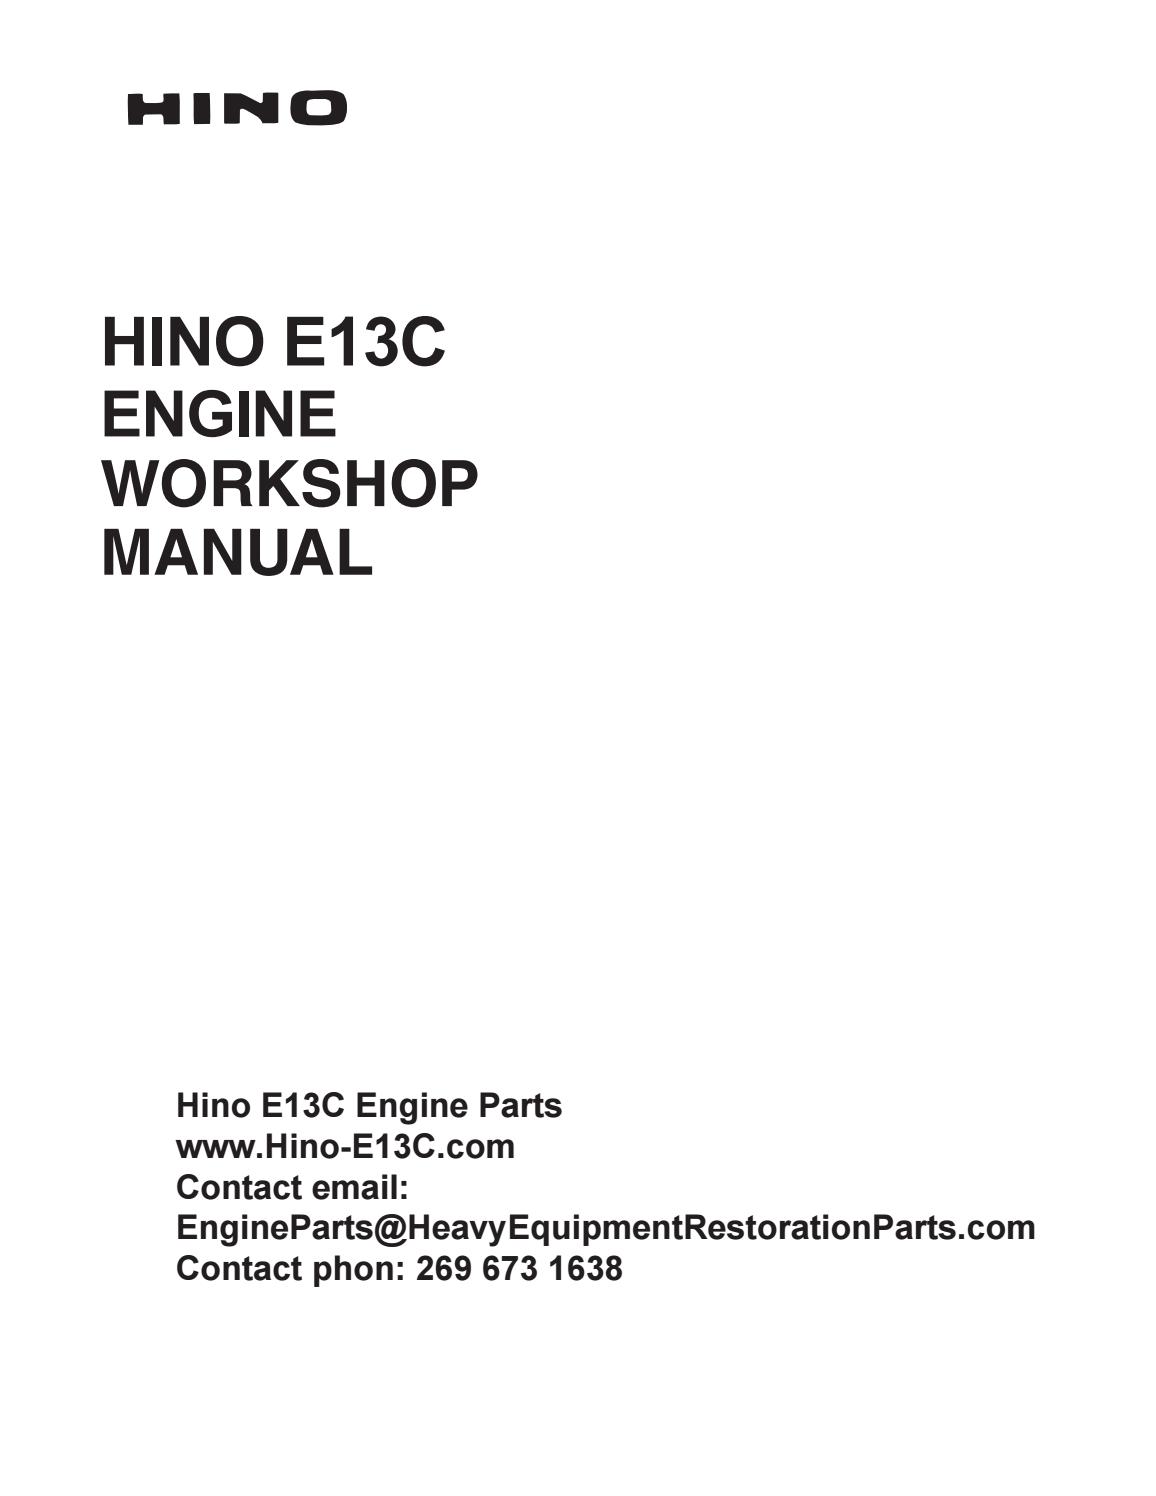 download Hino e13c engine workshop manual